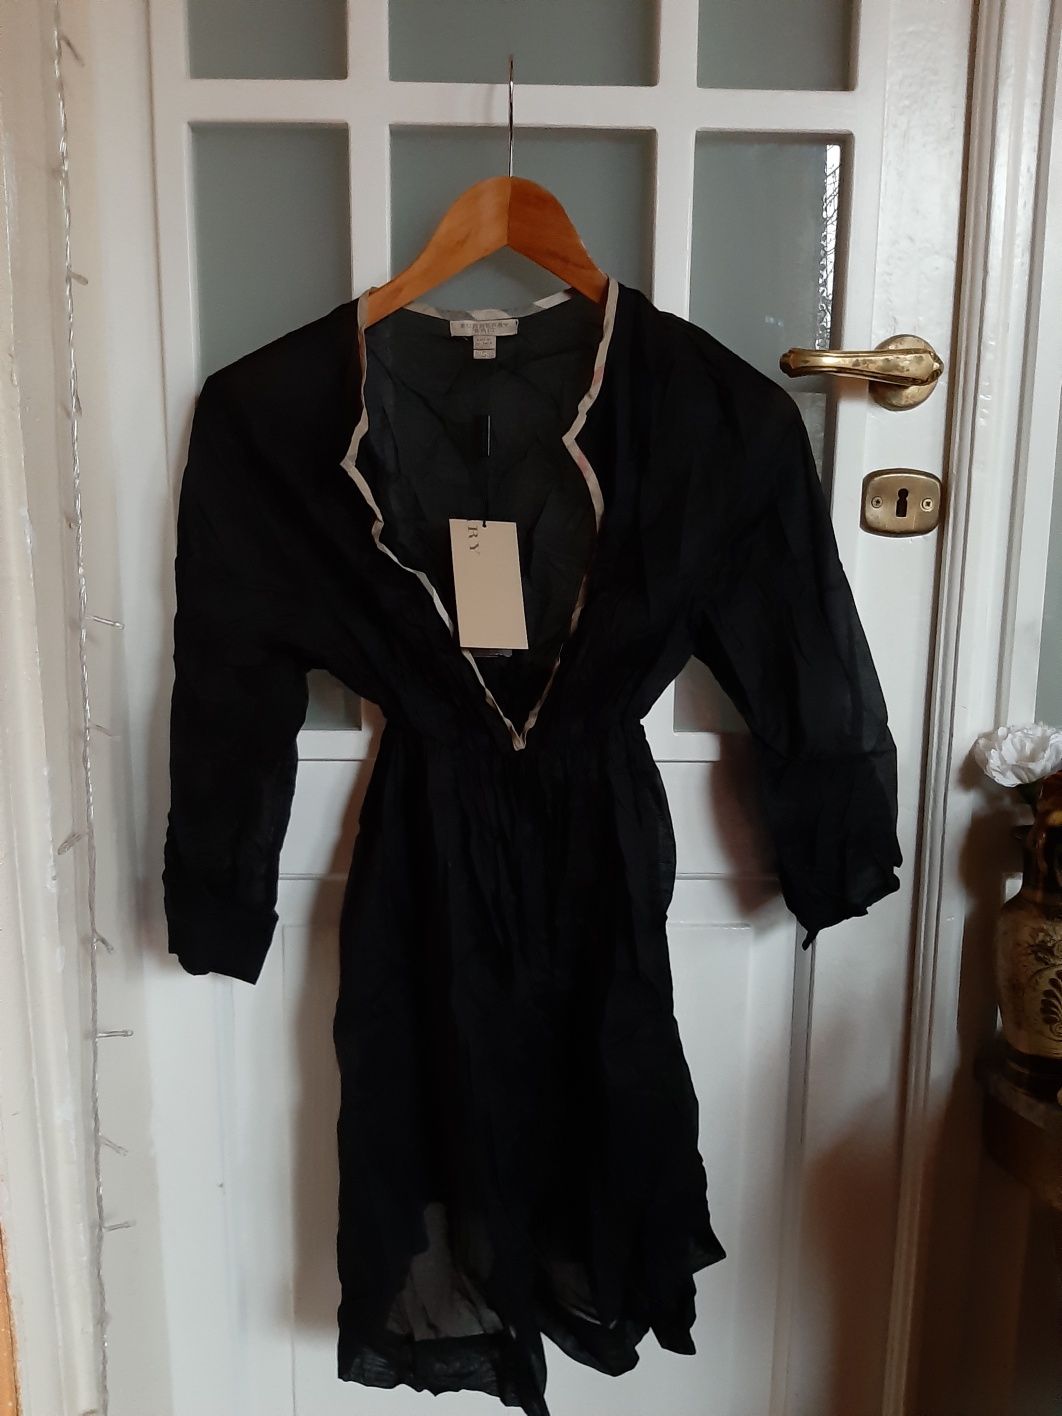 Burberry sukienka koszulka S czarna 100% oryg nr seryjny piękna prezen